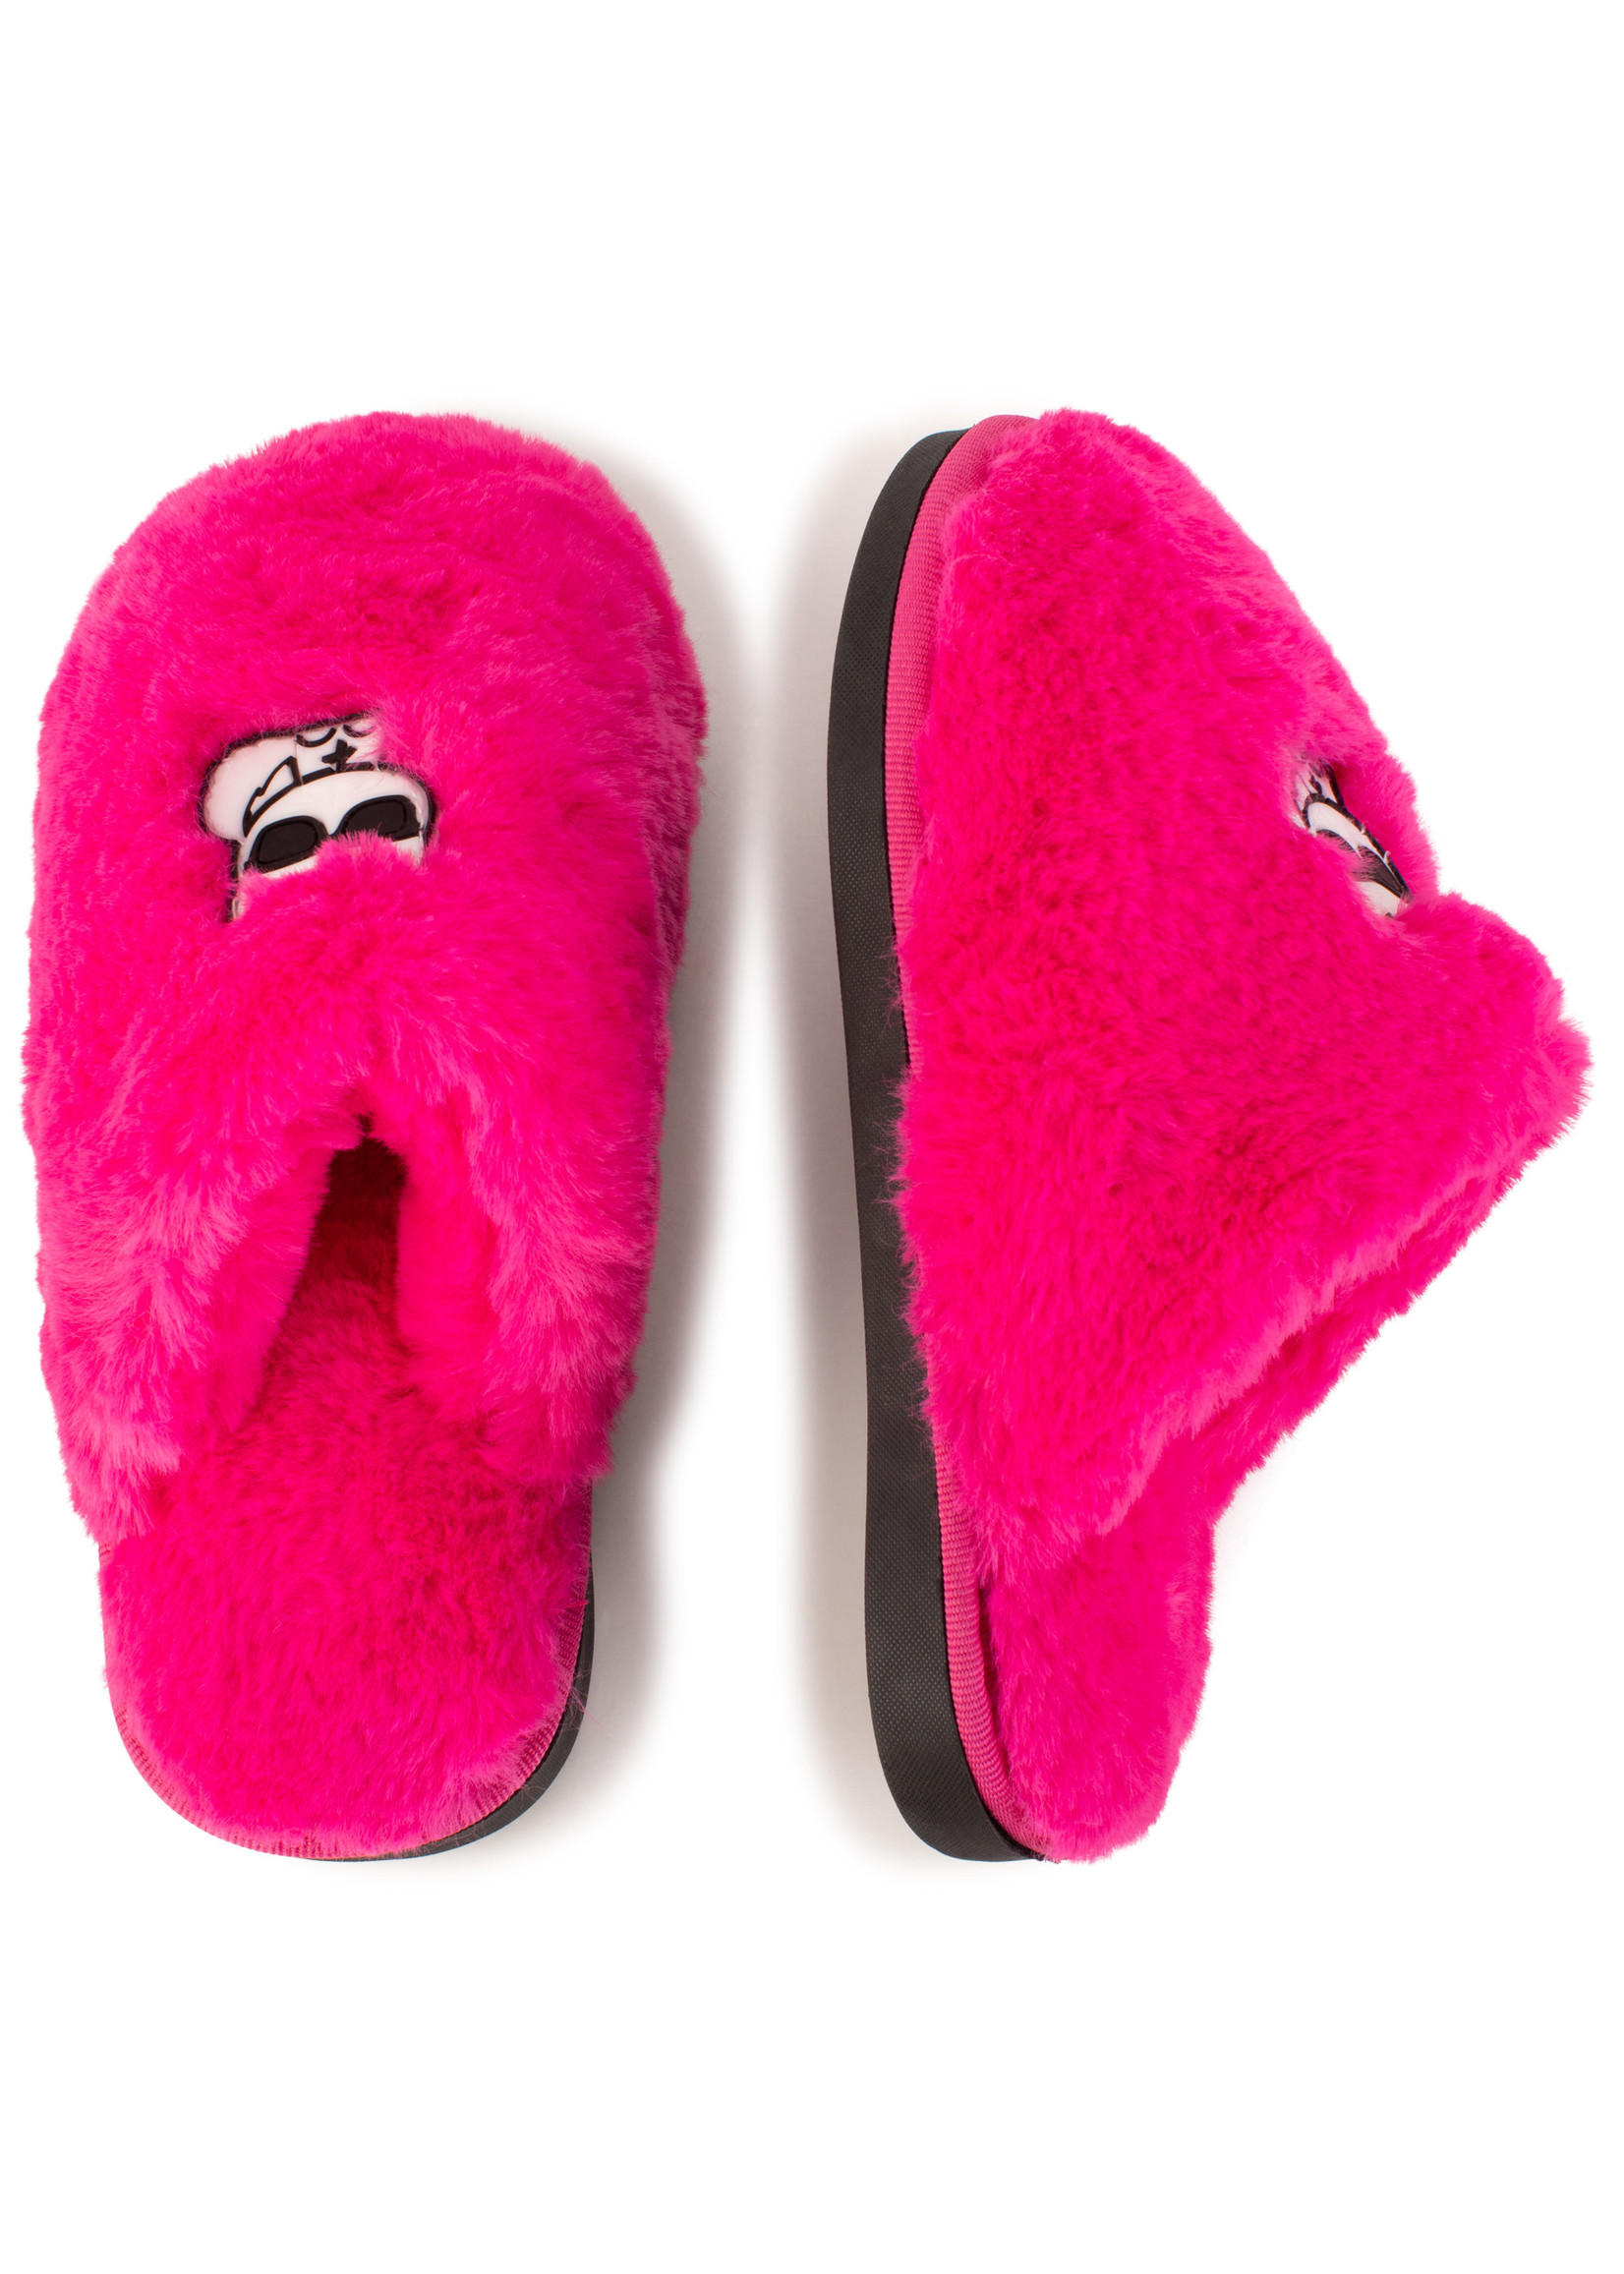 Lagerfeld Girl slippers fushia - Z19088 Tutti Confetti